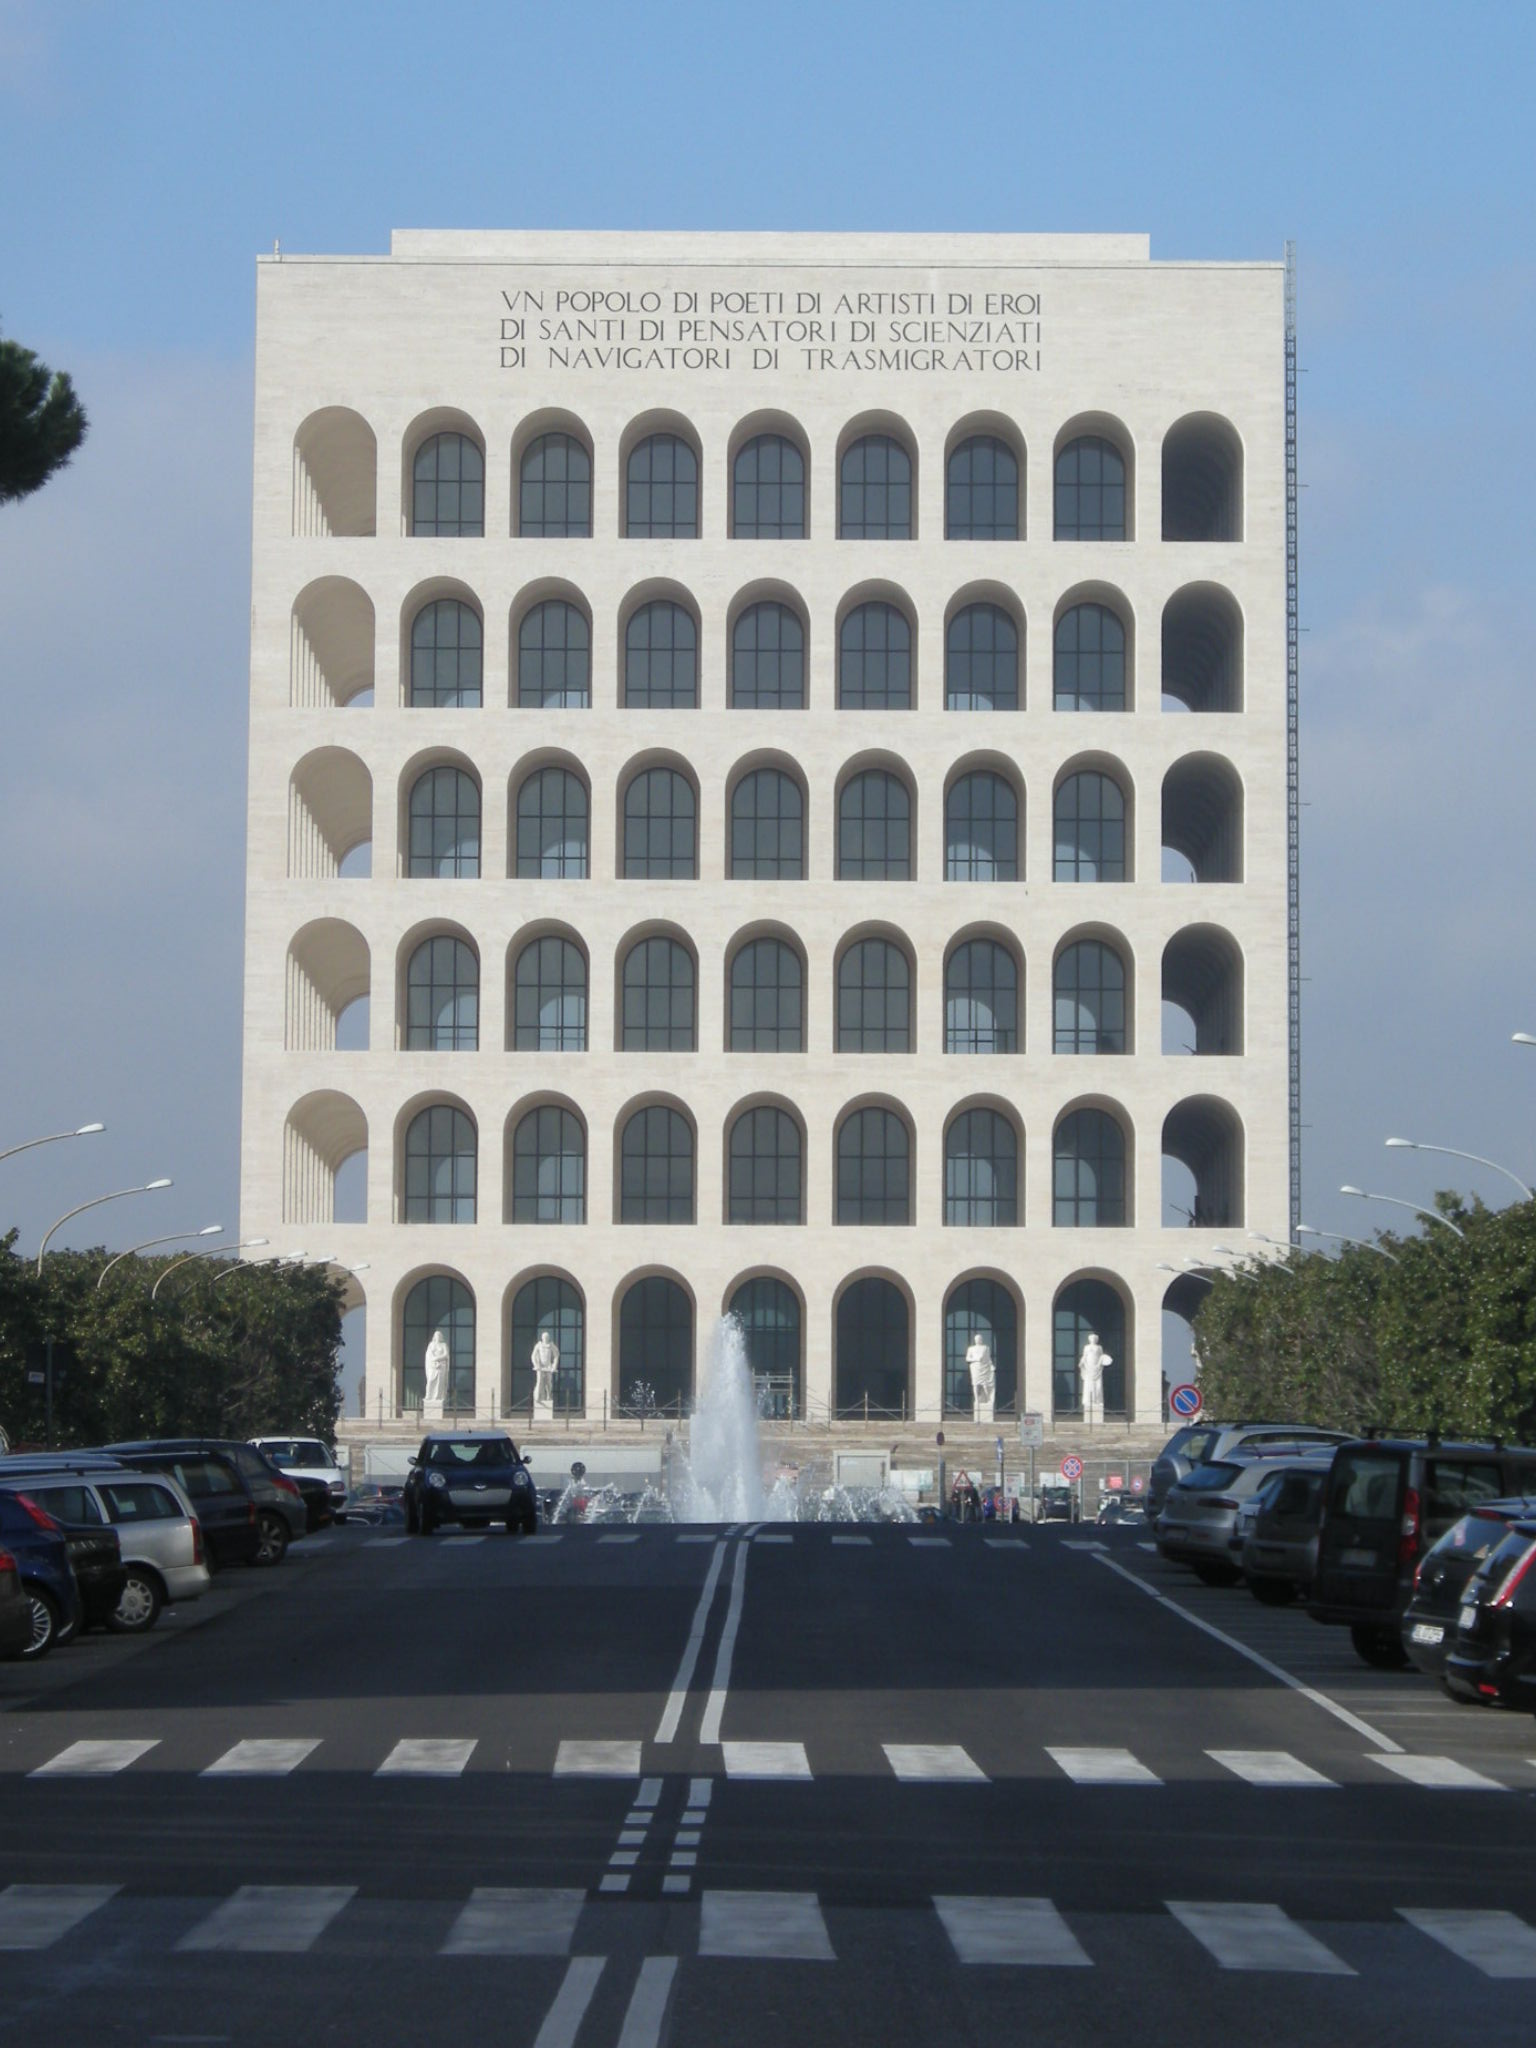 Square Colosseum HD wallpapers, Desktop wallpaper - most viewed